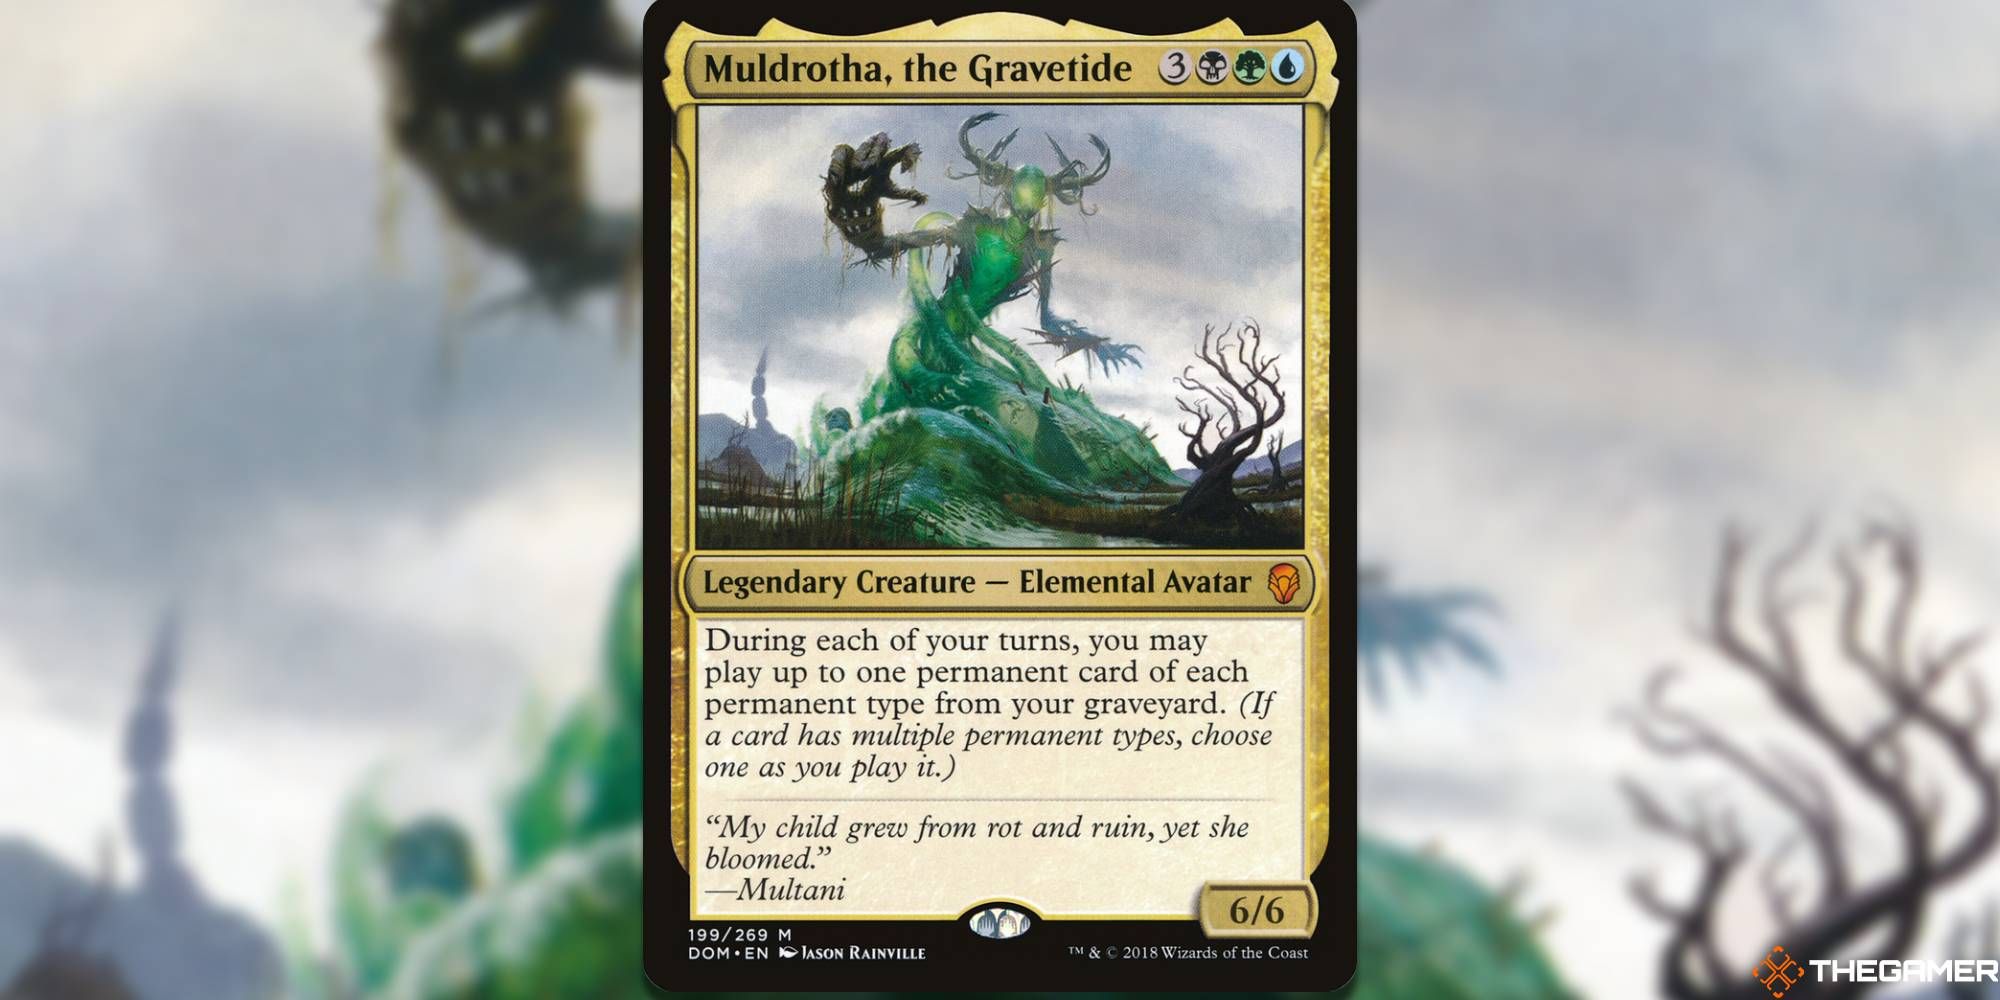 Muldrotha, the Gravetide full card and art background